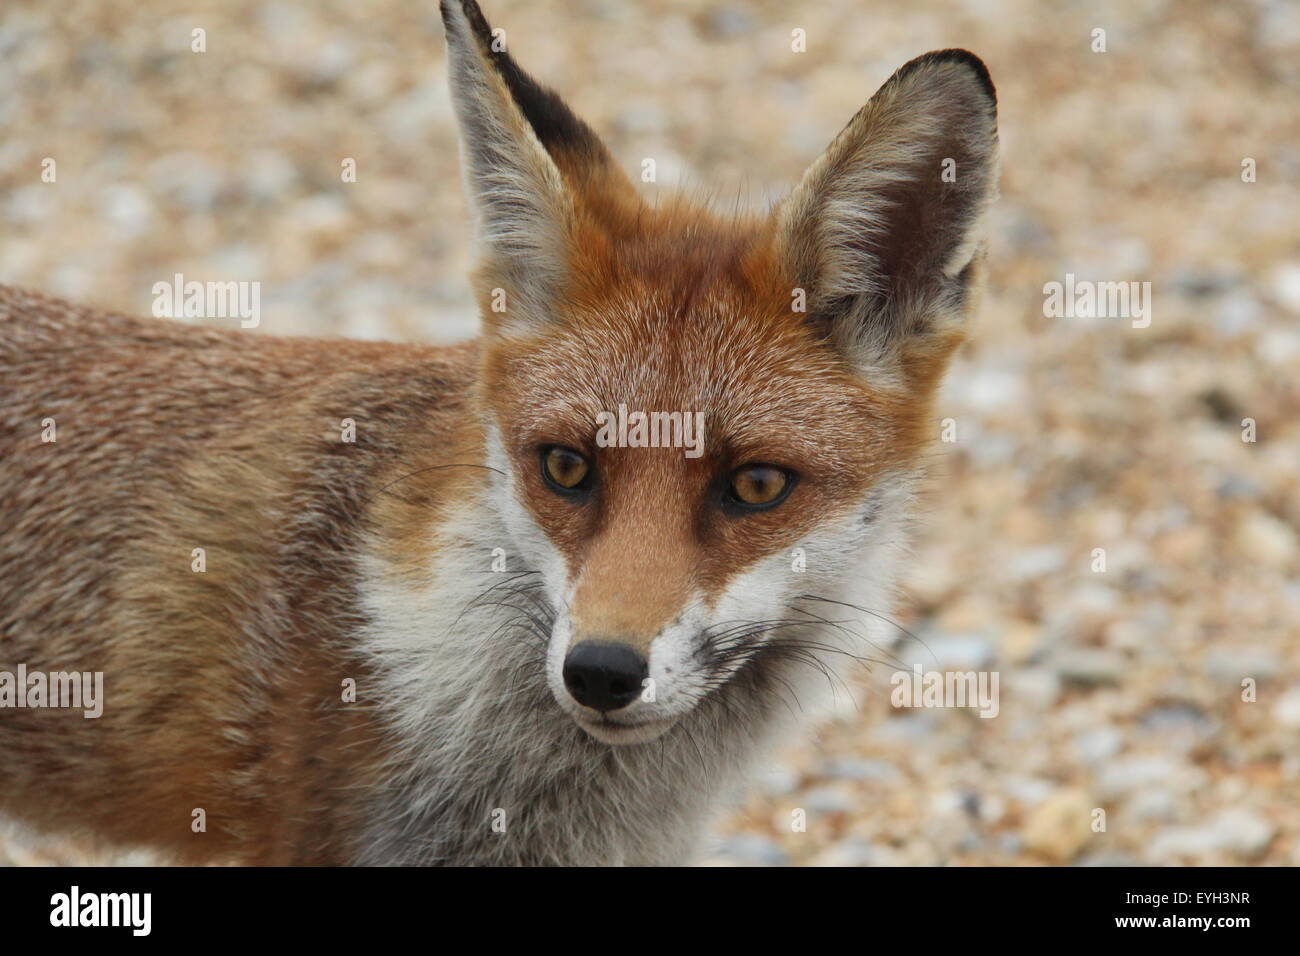 A WILD BRITISH ADULT RED FOX Stock Photo